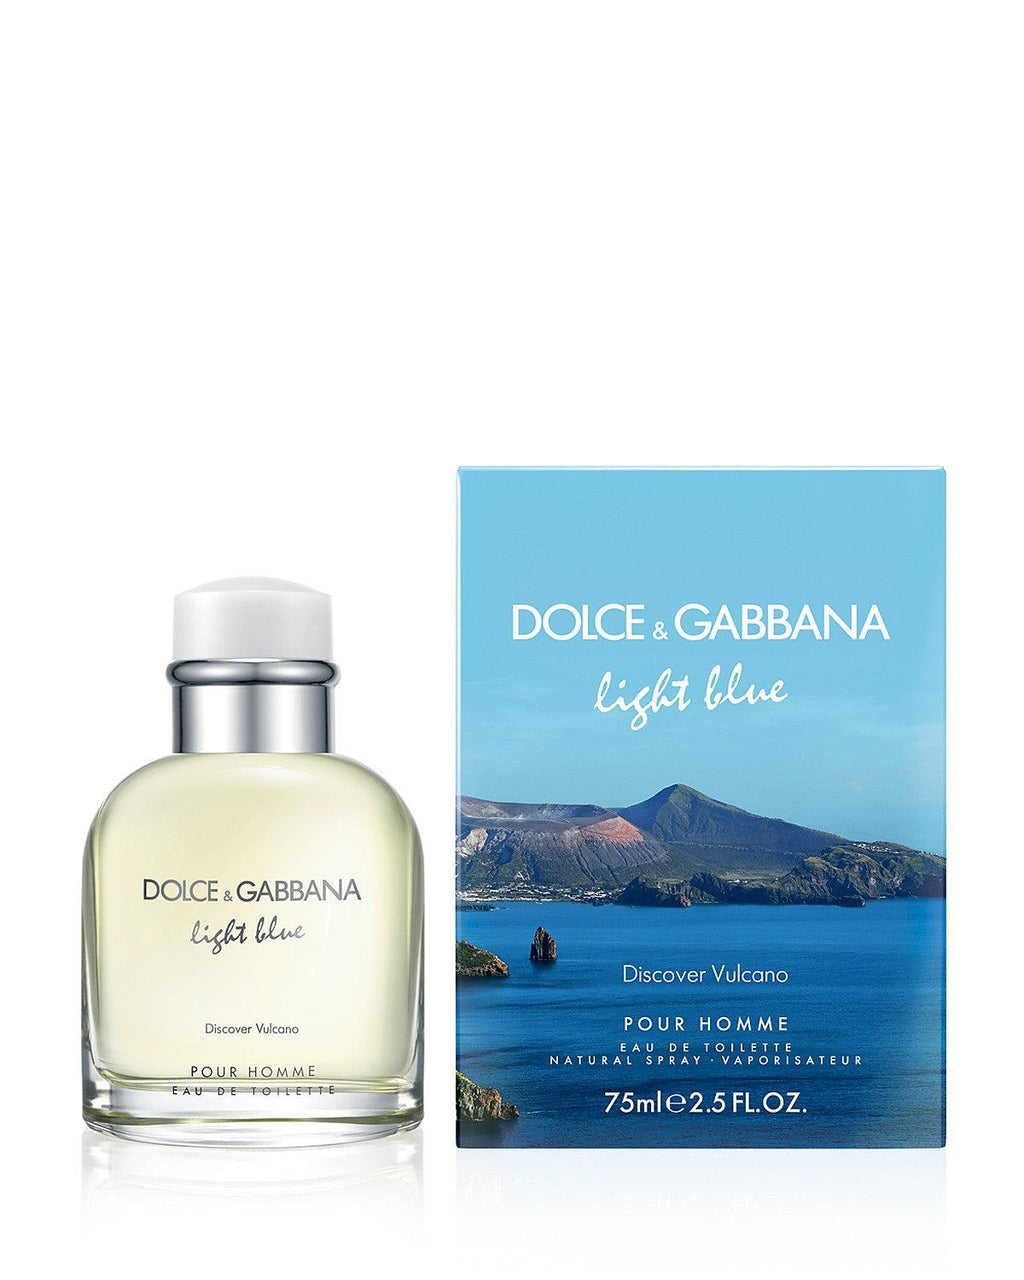 Dolce & Gabbana Light Blue Discover Vulcano Pour Homme - ScentsForever